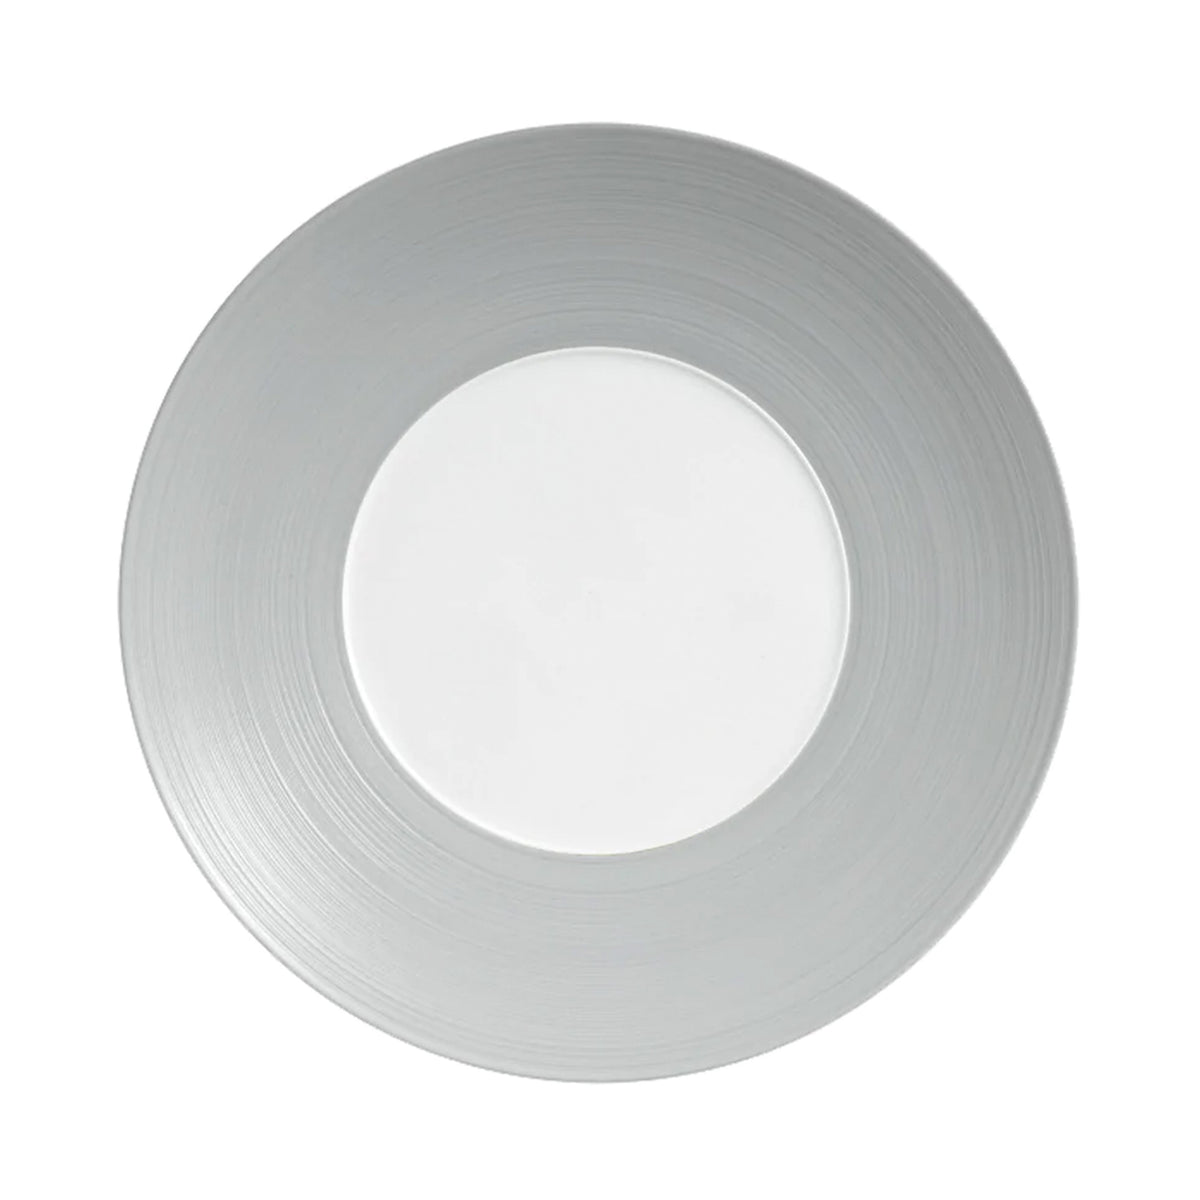 HEMISPHERE Grey - 29 cm plate